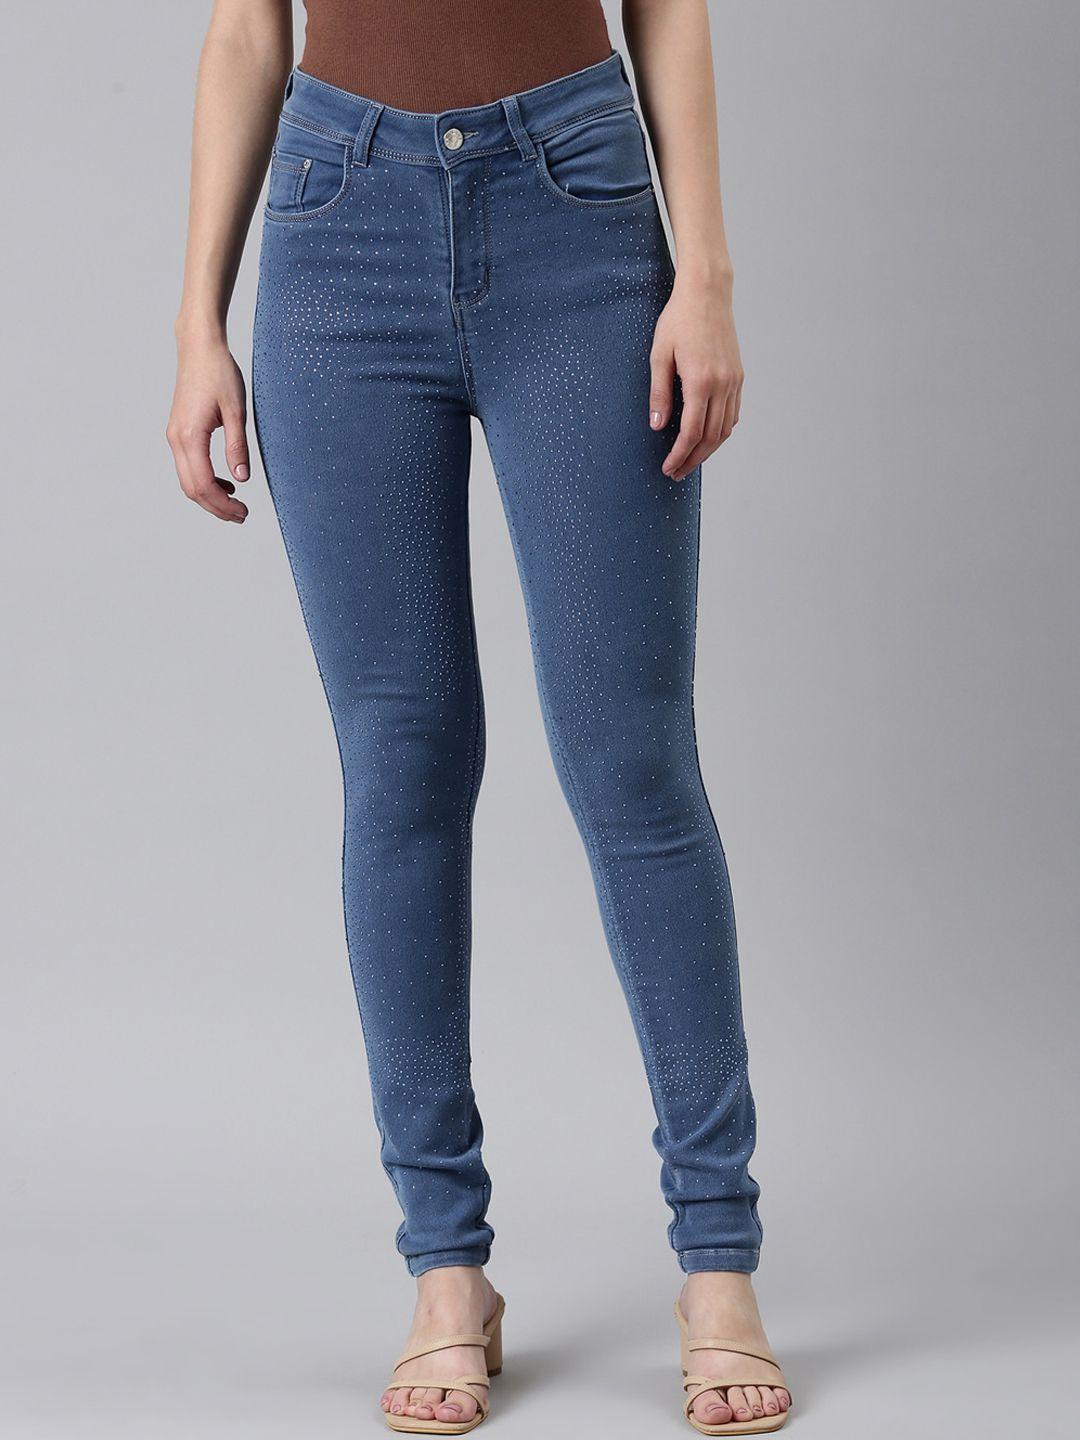 showoff women jean slim fit mid-rise embellished stretchable jeans